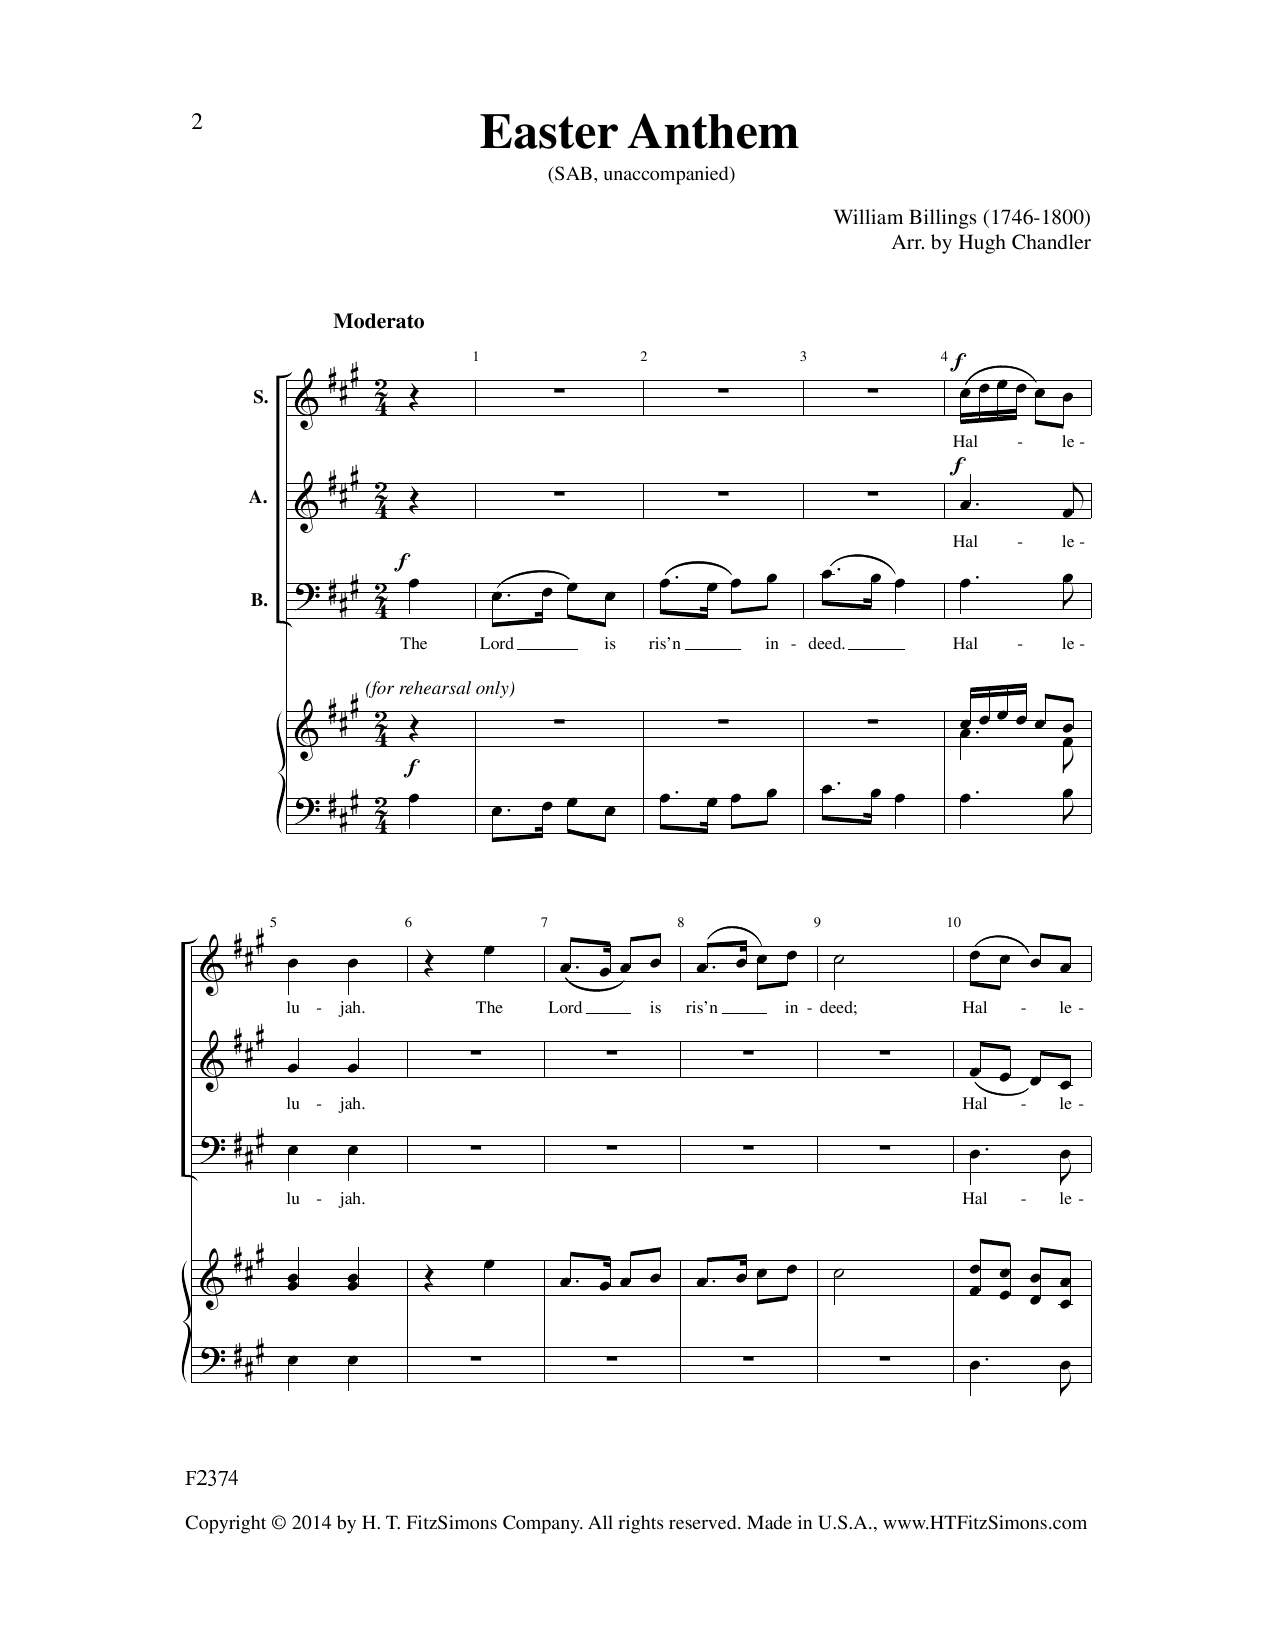 William Billings Easter Anthem (arr. Hugh Chandler) Sheet Music Notes & Chords for SAB Choir - Download or Print PDF